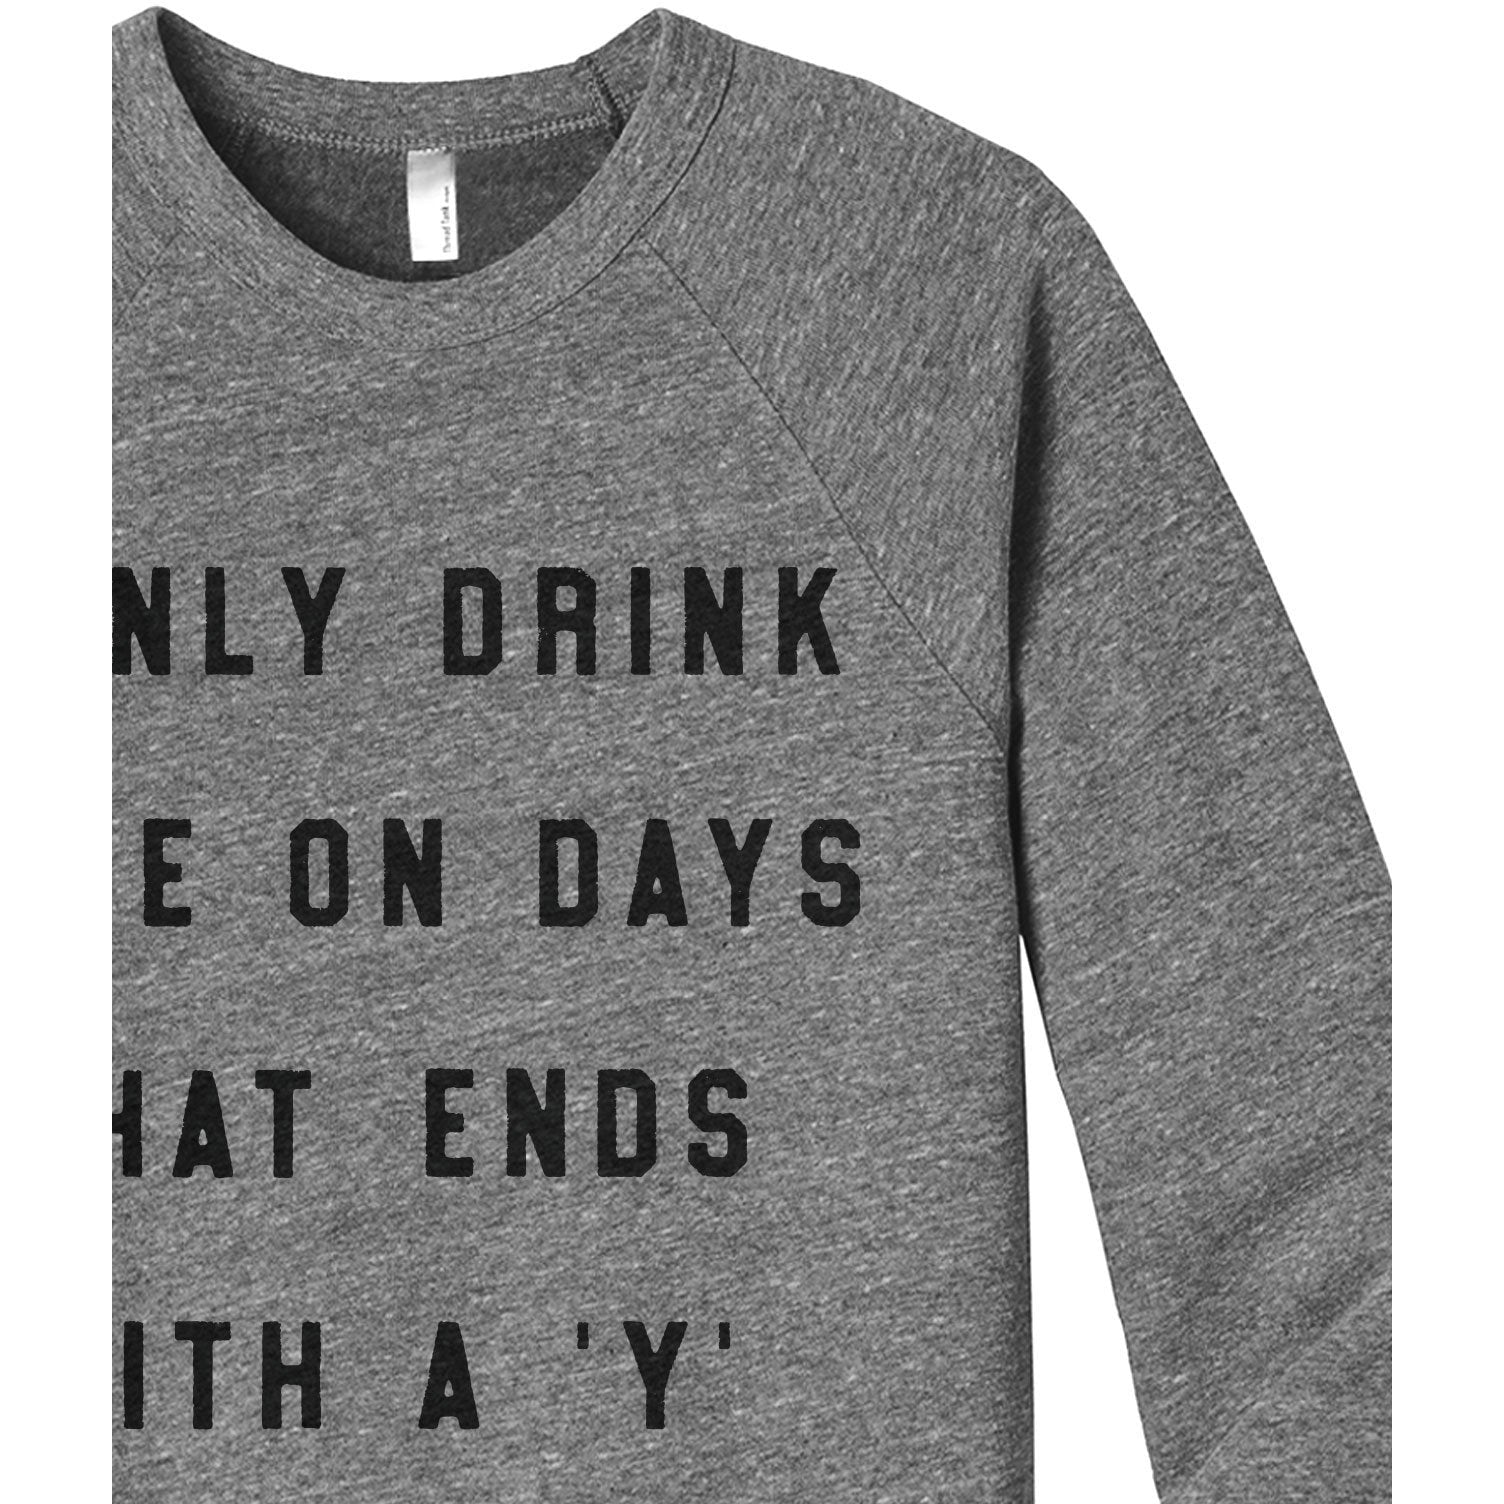 Drink Wine On Days Ends With Y Women's Cozy Fleece Longsleeves Sweater Heather Grey Closeup Details